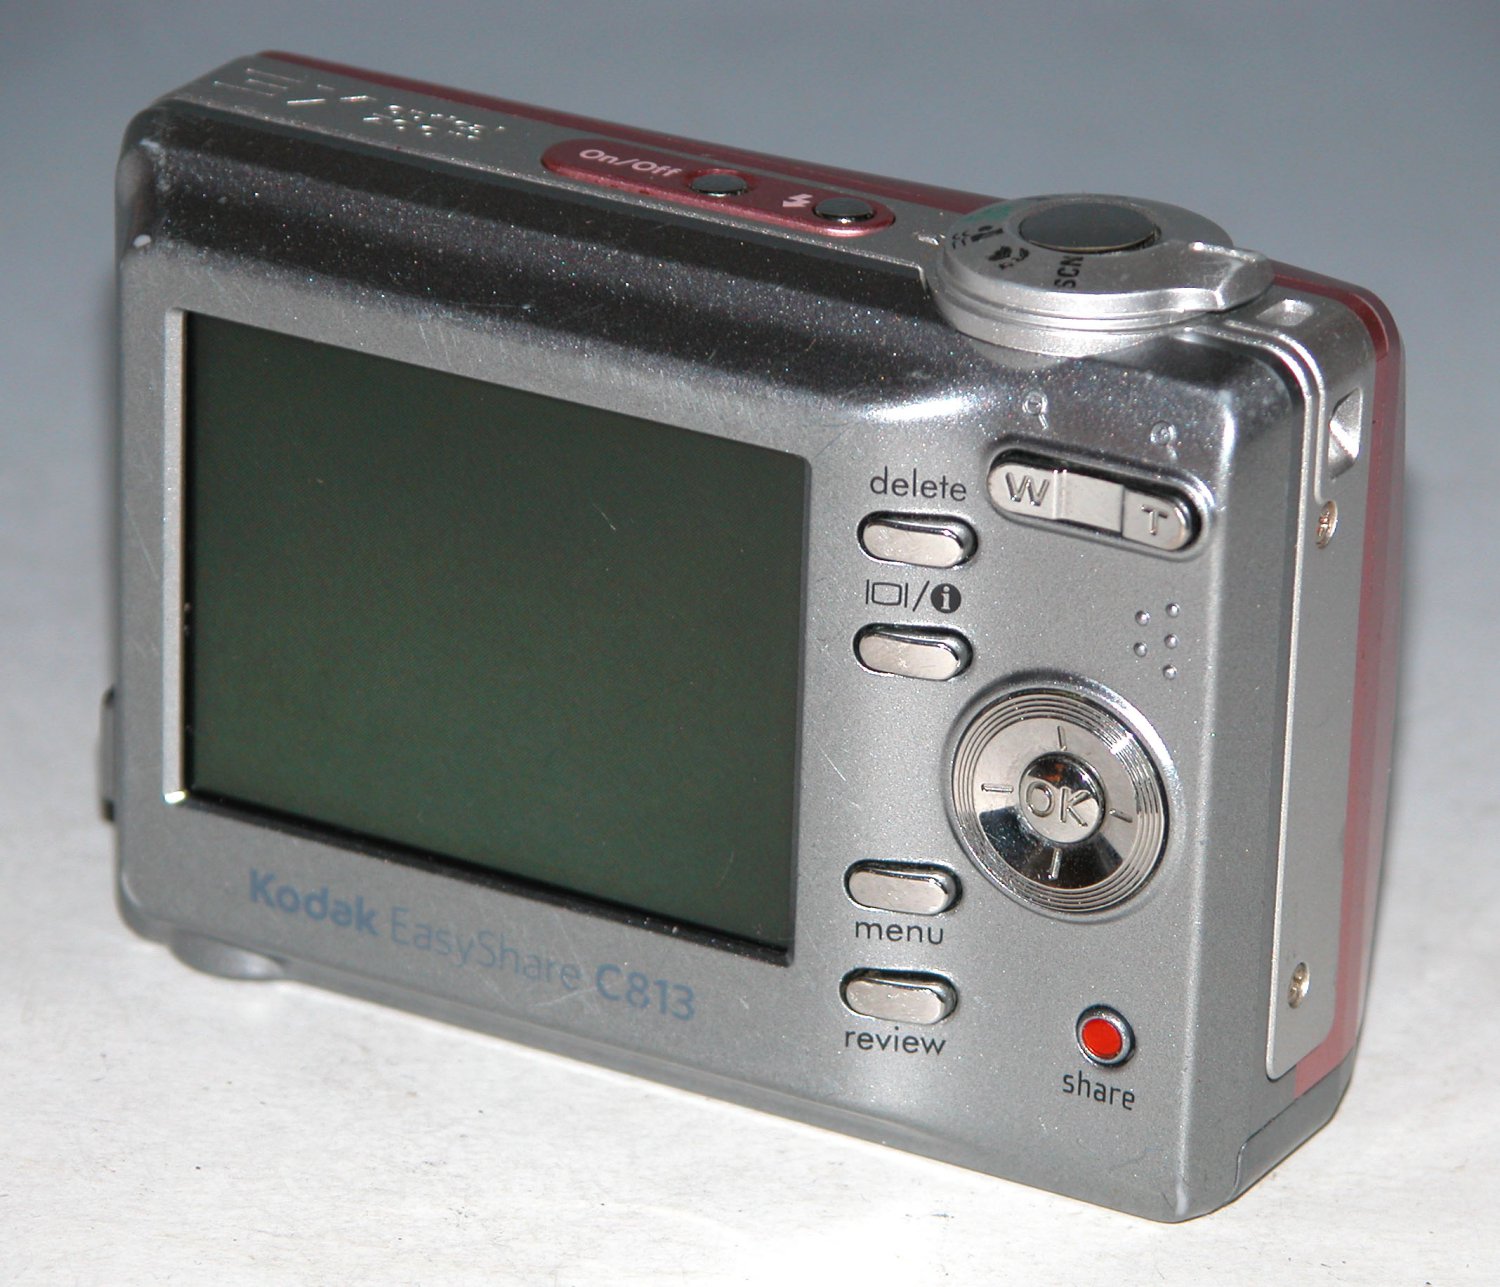 Kodak Easyshare C813 8.2MP Digital Camera - Pink/Silver #8628